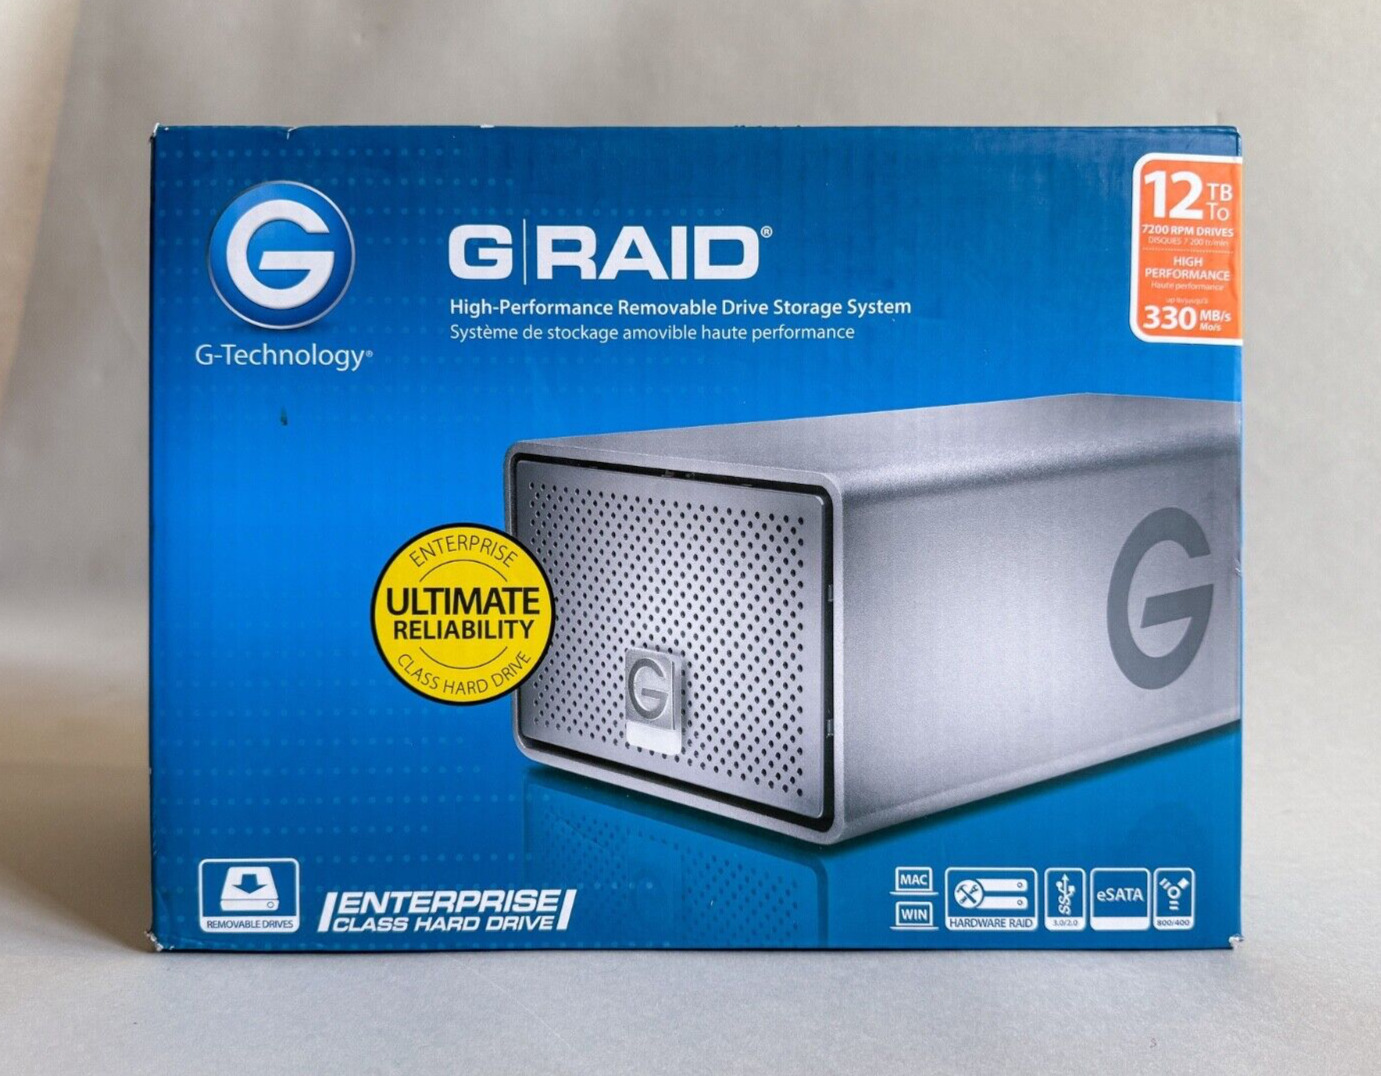 G-Technology G-RAID 12TB (2 x 6TB) FireWire USB 3.0 External Hard Drive 0G03411